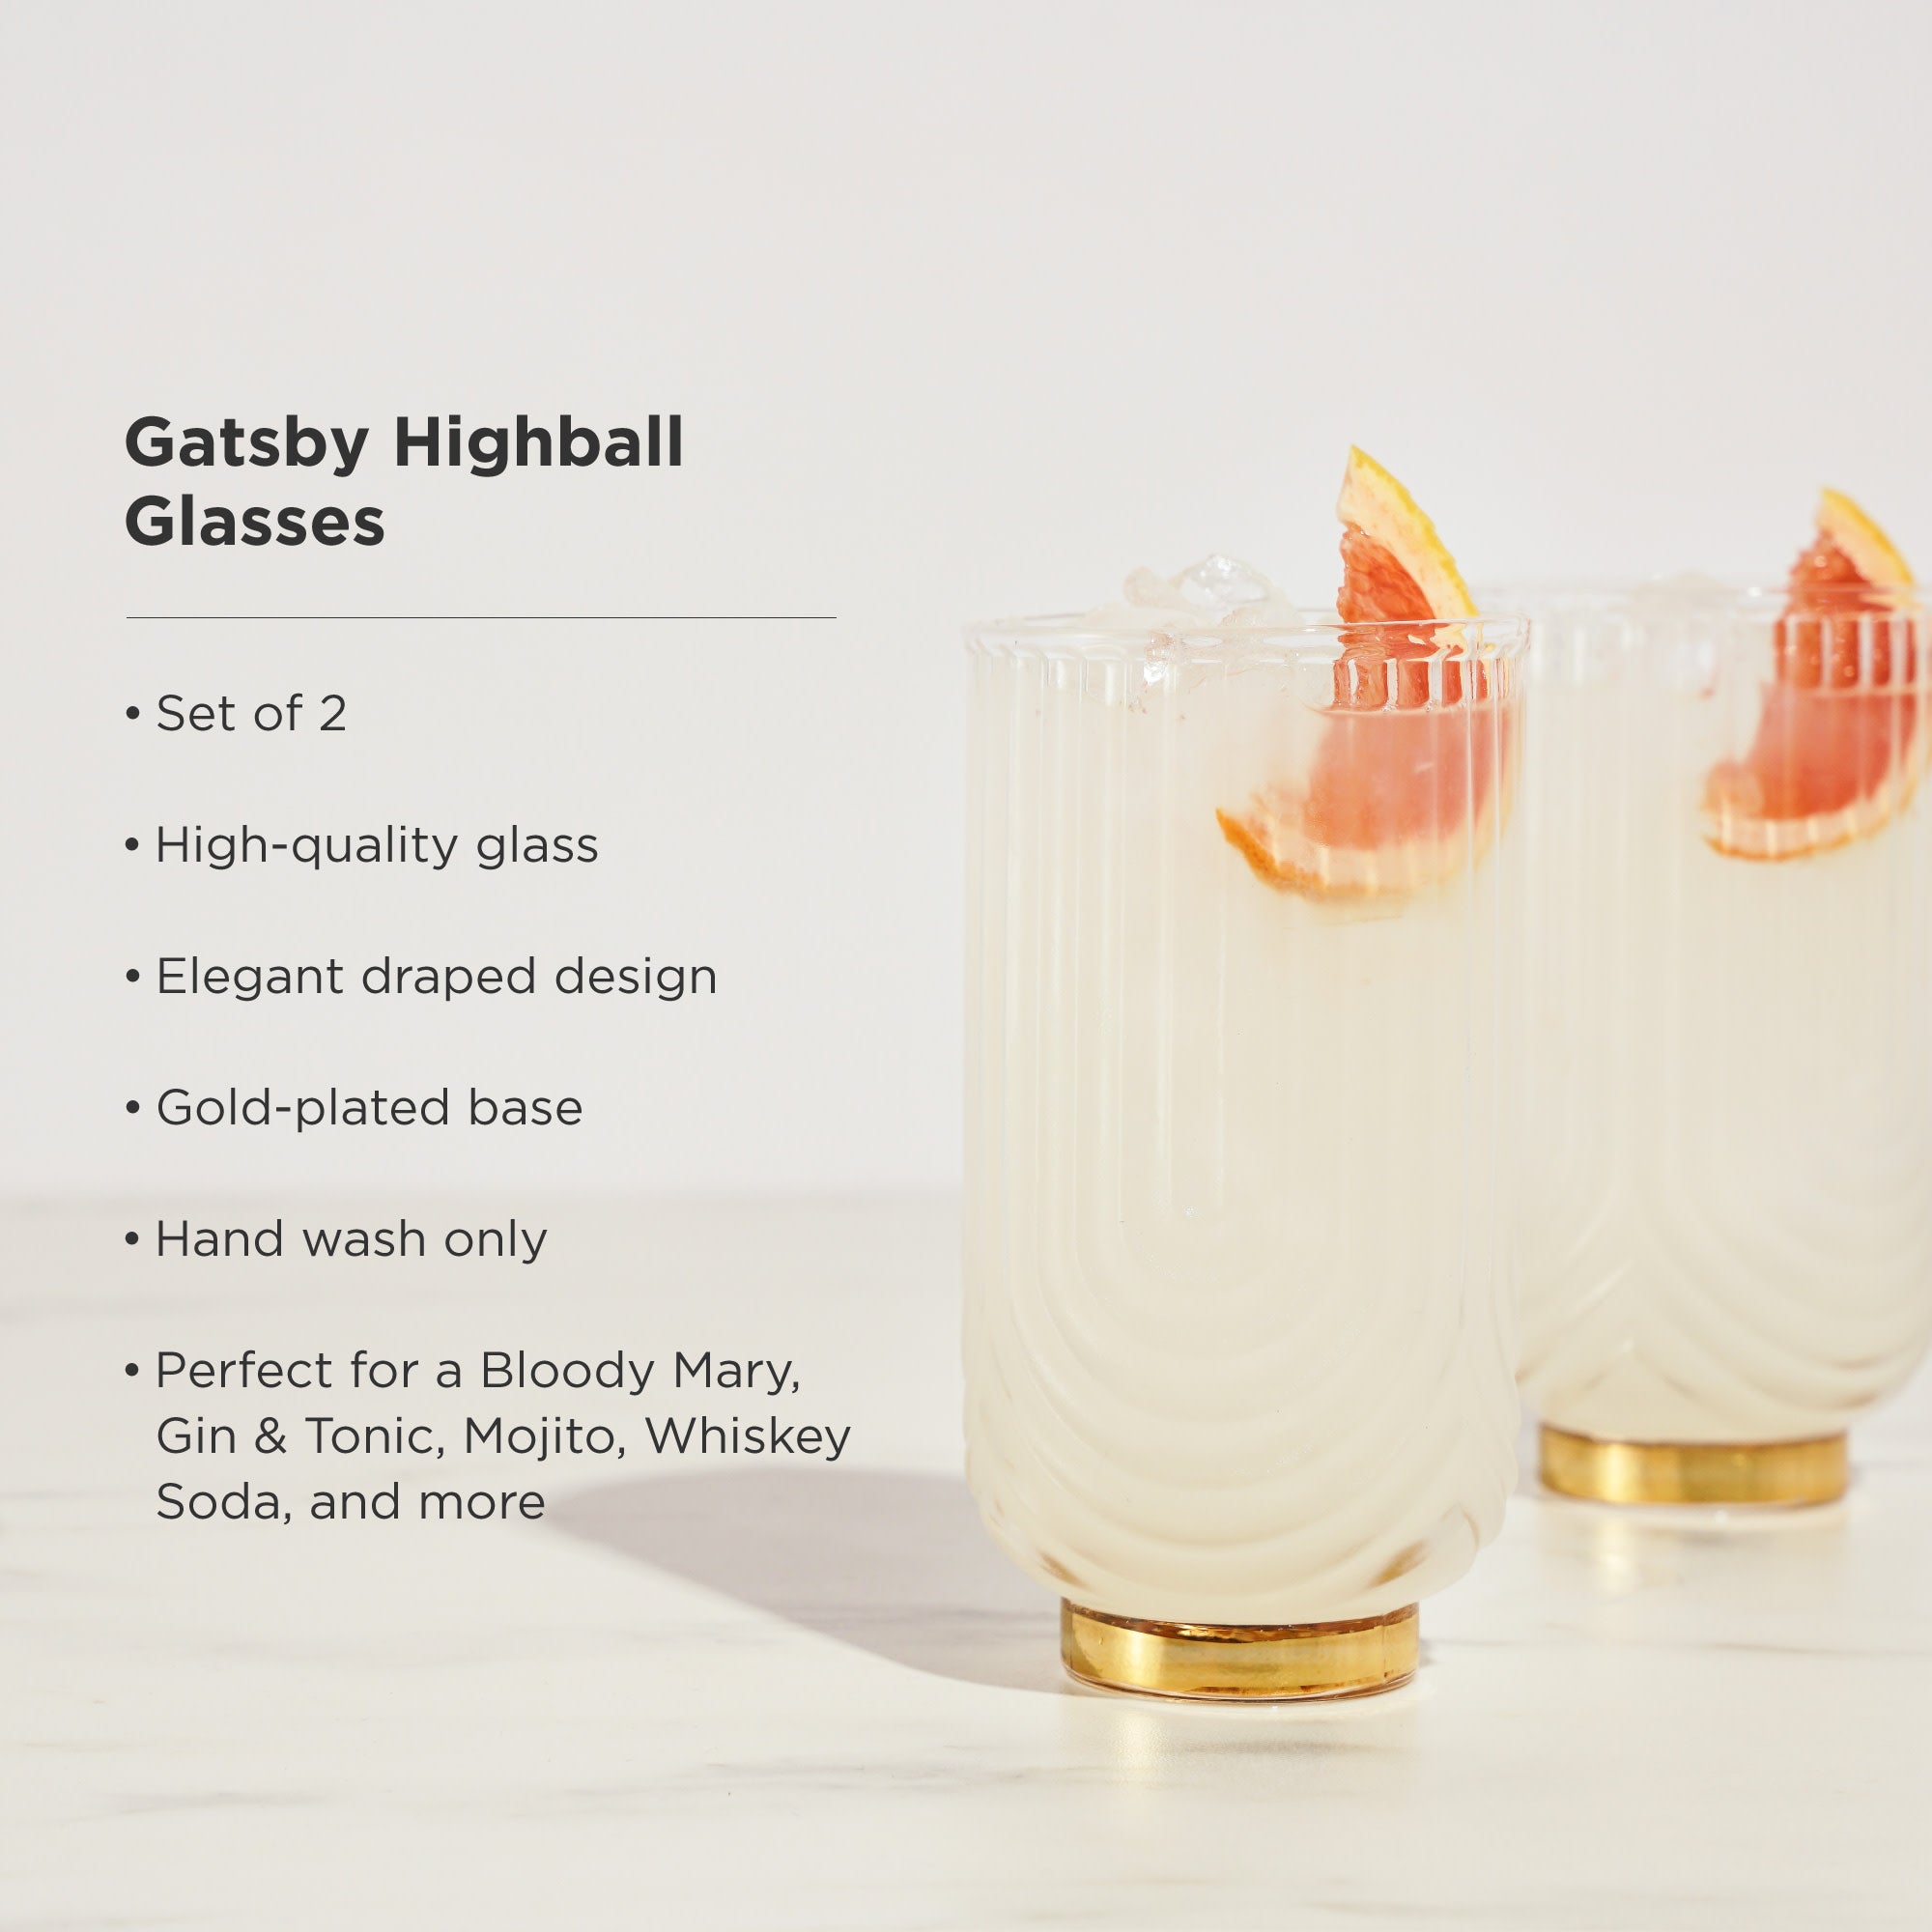 Gatsby Highball Glasses Set of 2